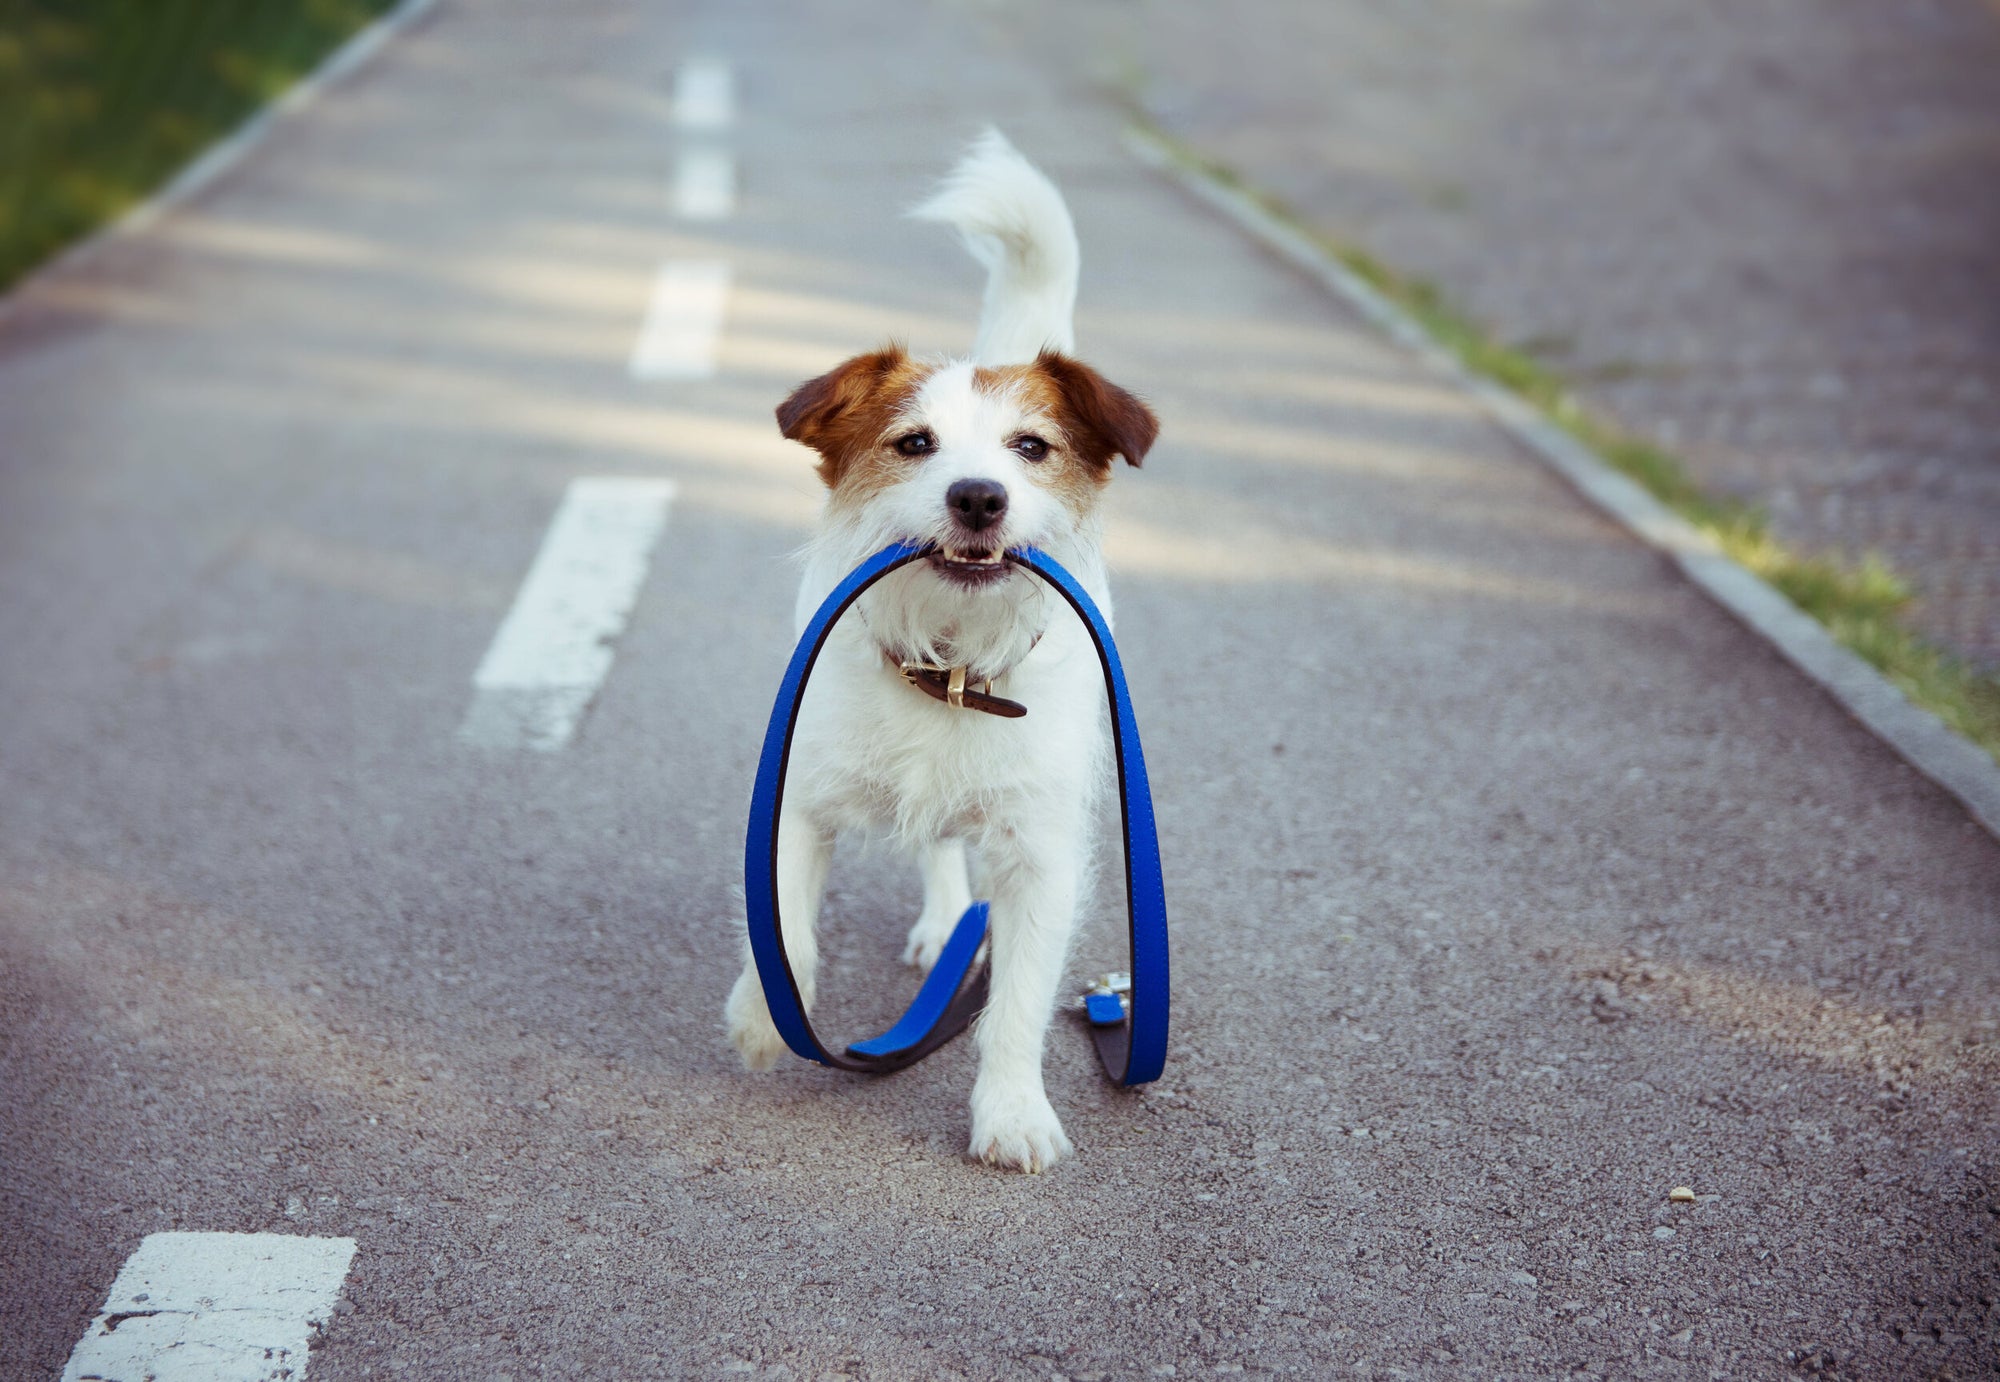 Walking Made Easy | 5 Reasons a Spleash® Makes Dog Walking Stress-Free